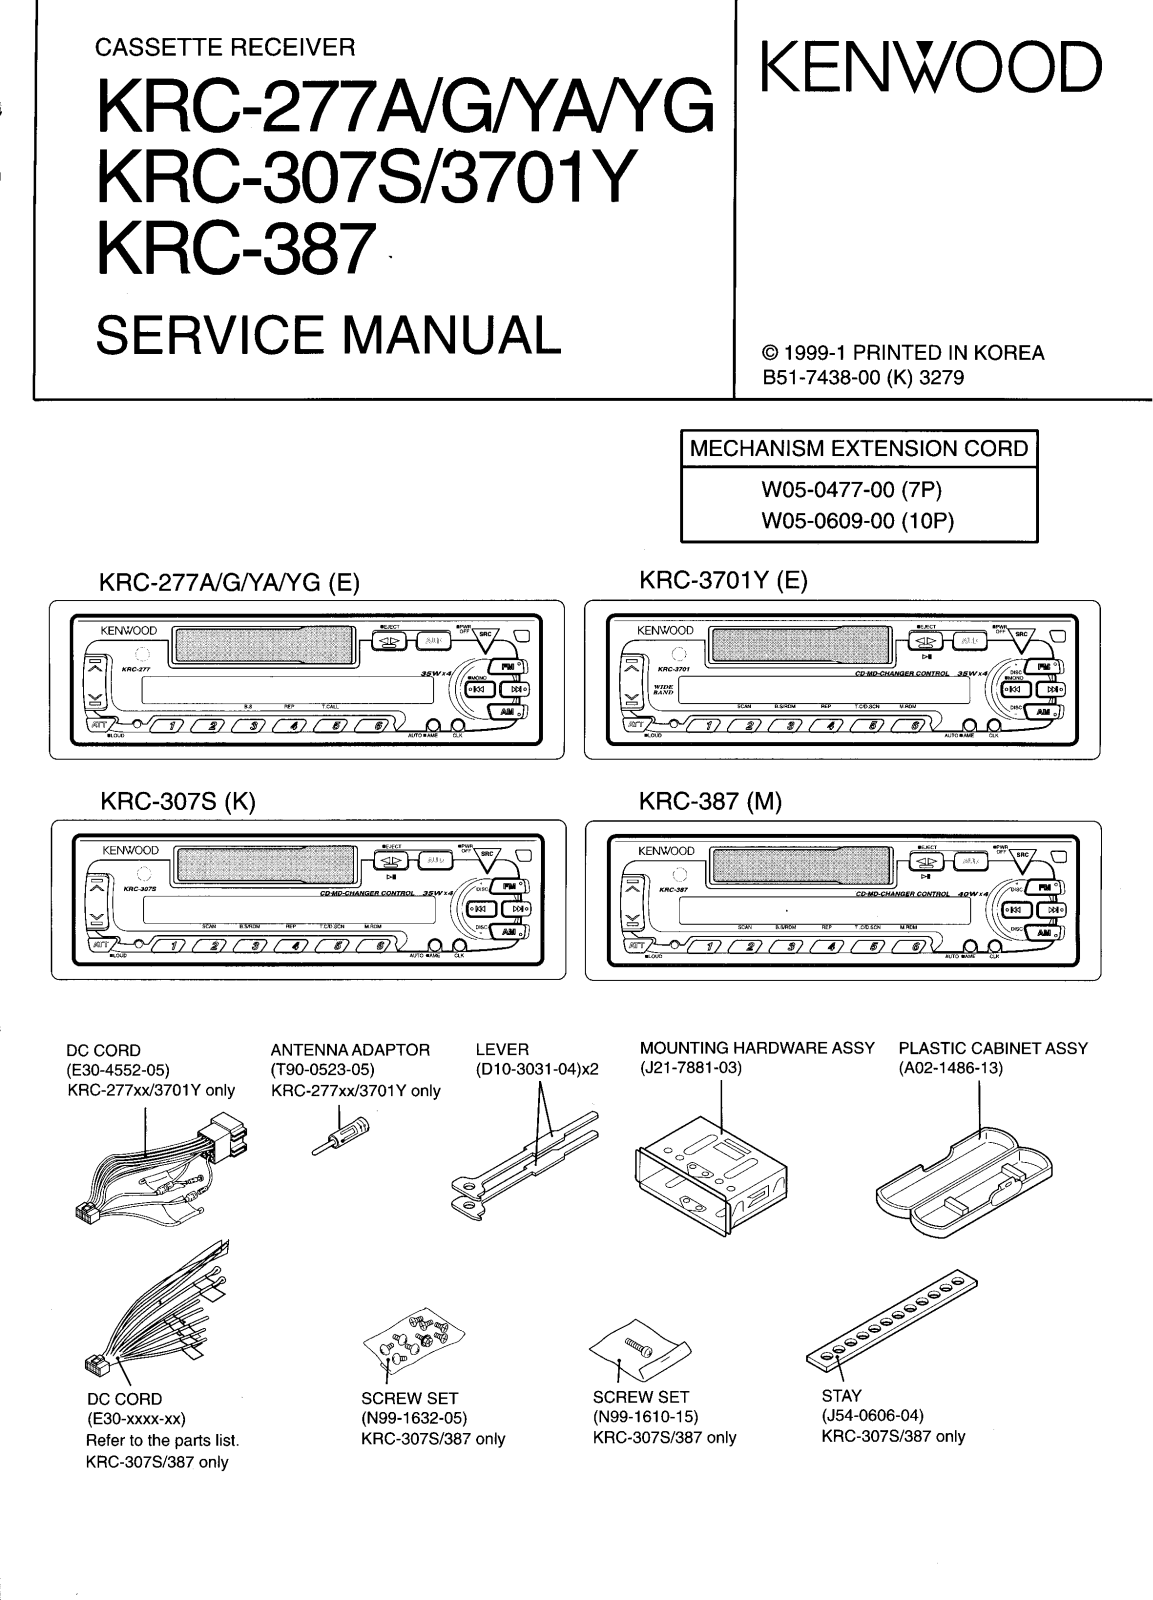 kenwood KRC-277A, KRC-277G, KRC-277YA, KRC-277YG, KRC-307S Service Manual